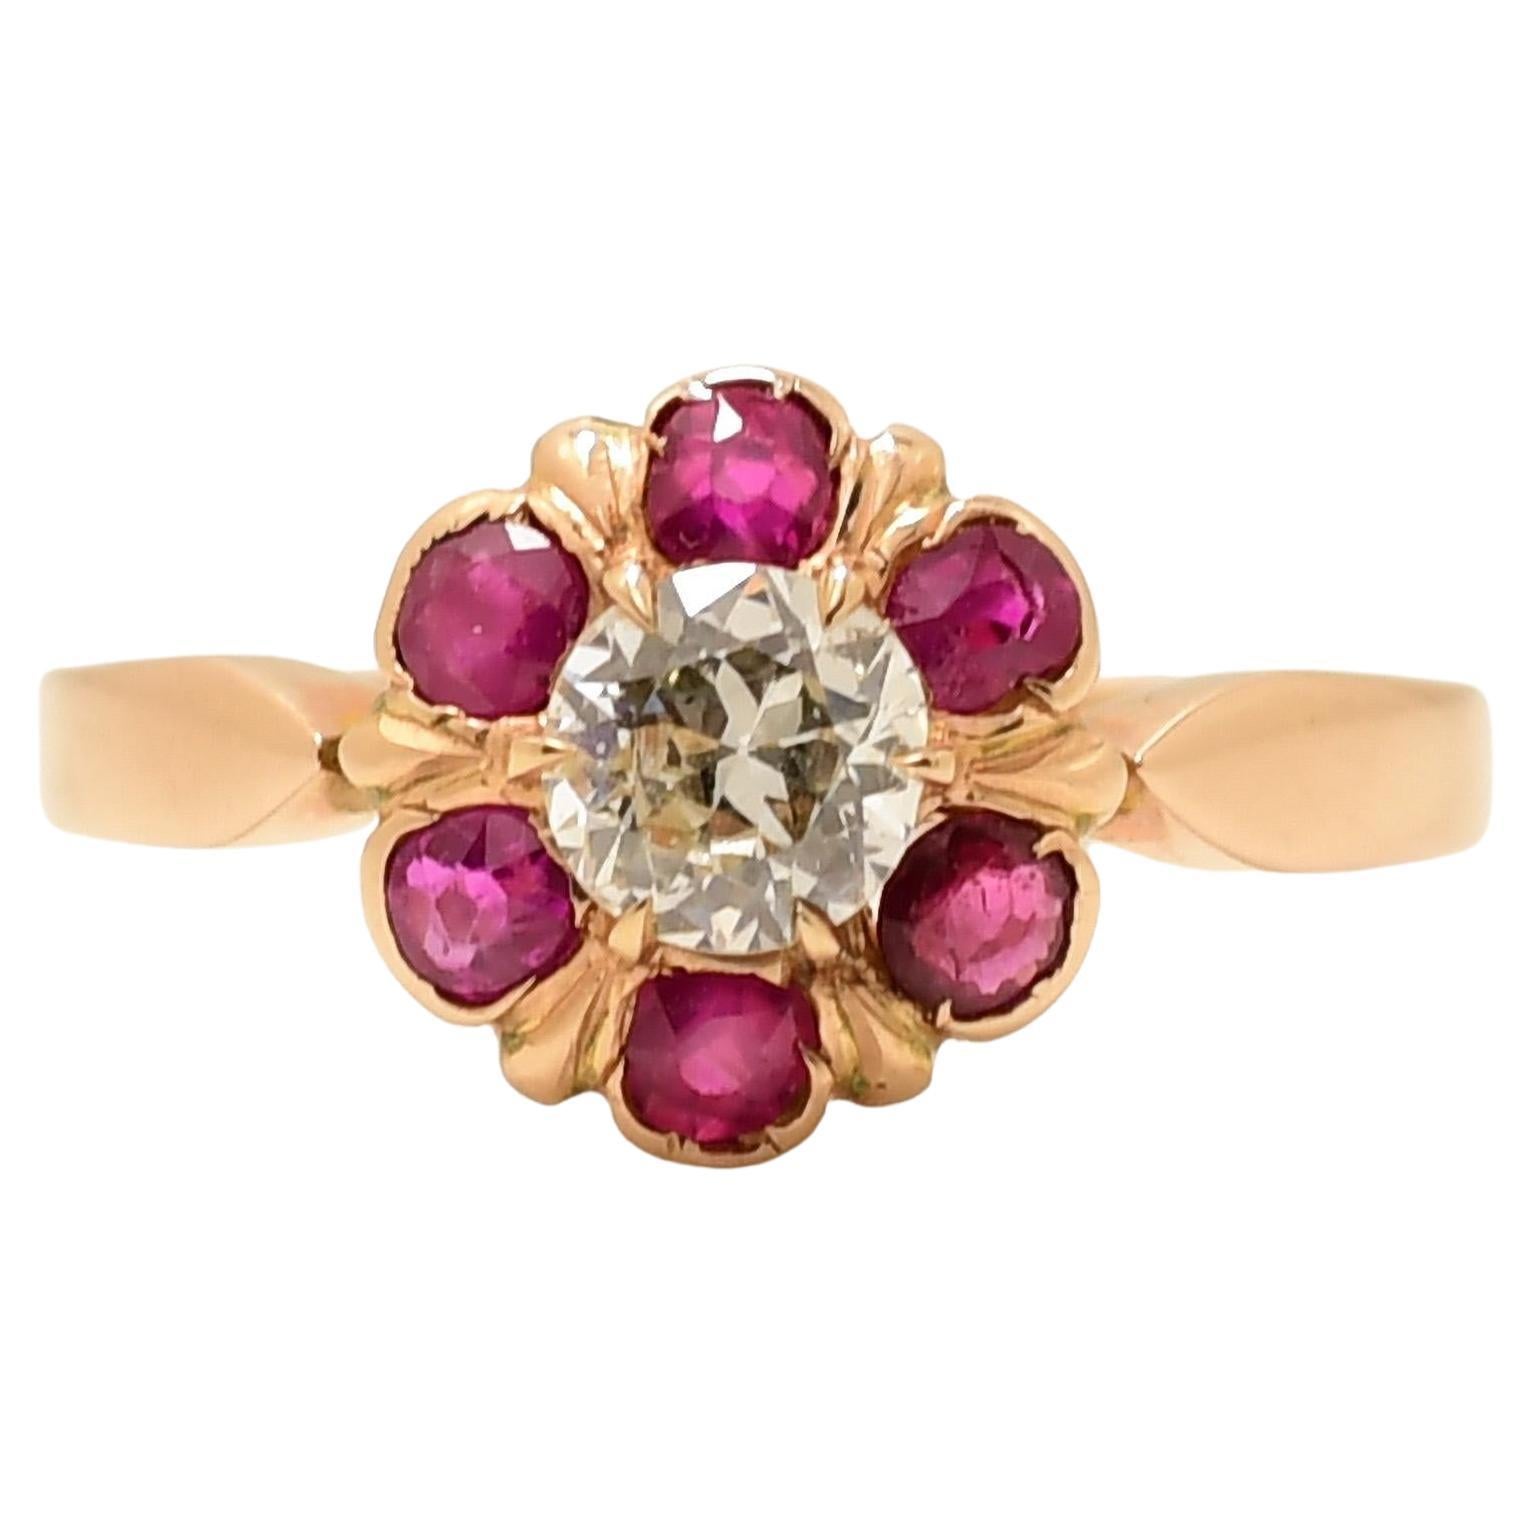 Circa 1900's Victorian 18K Rose Gold Brilliant GIA Certified Diamond & Ruby Ring